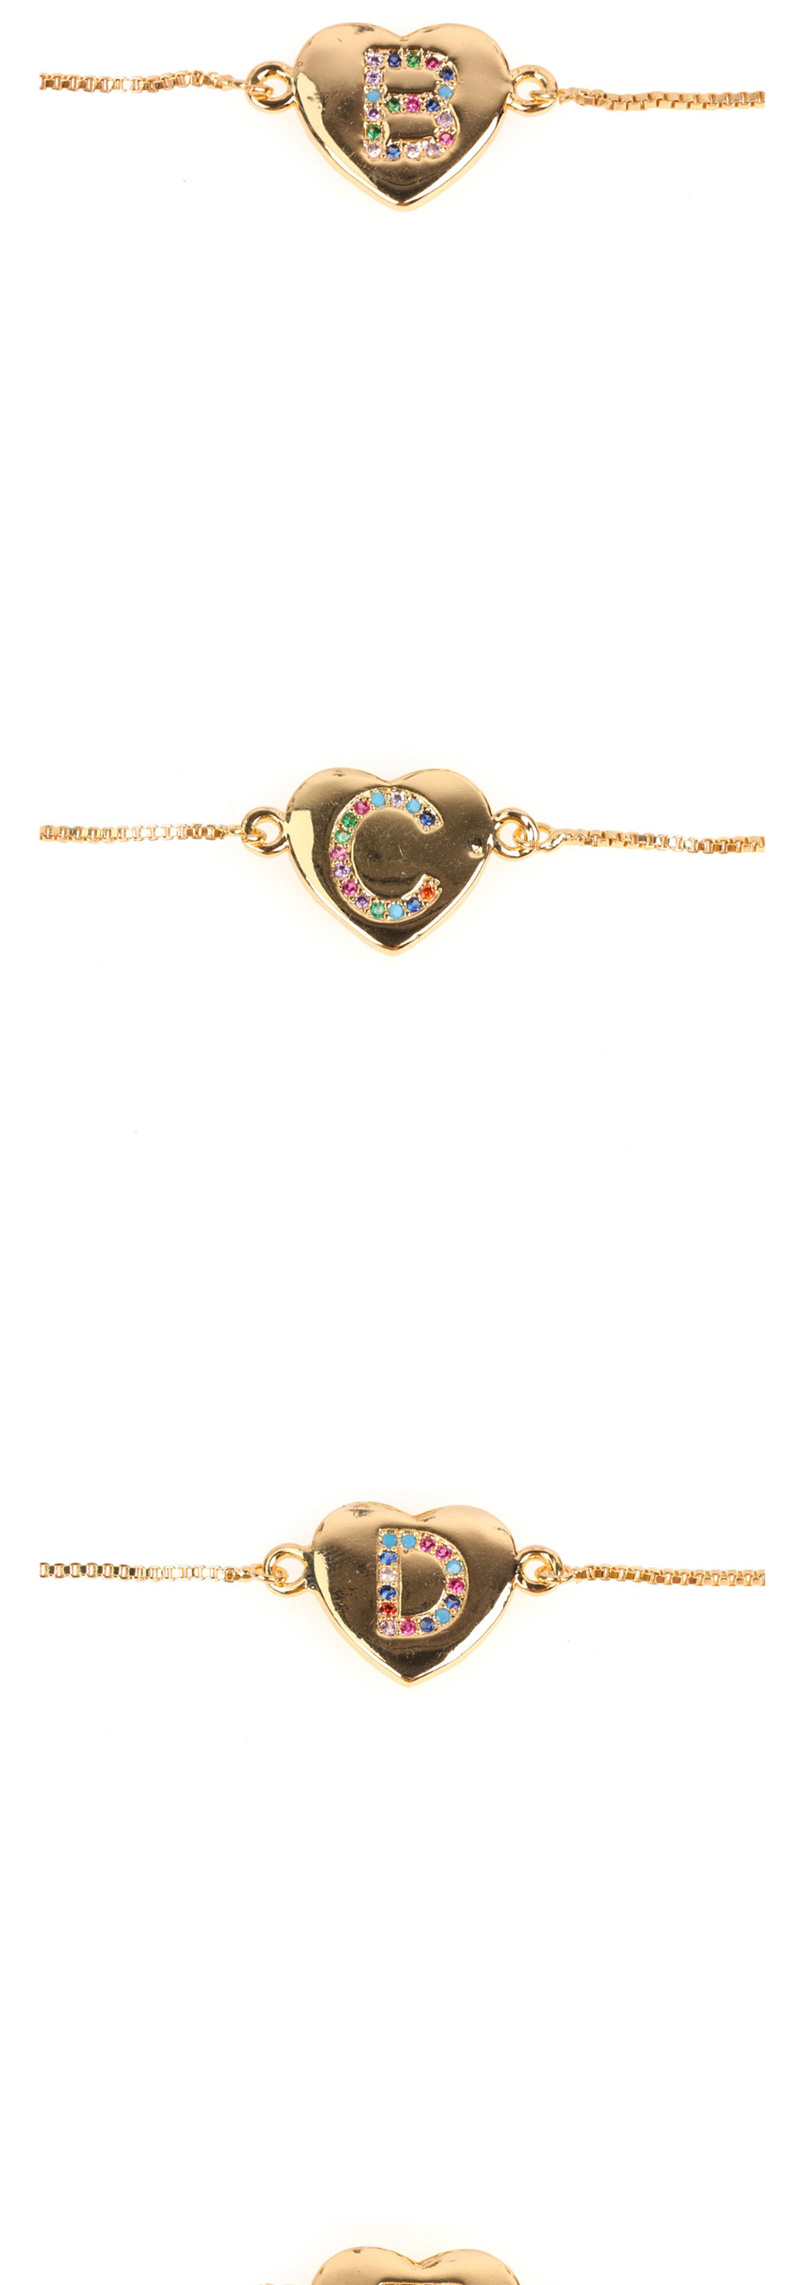 Fashion E-gold Heart Bracelet With Diamonds And Letters,Bracelets